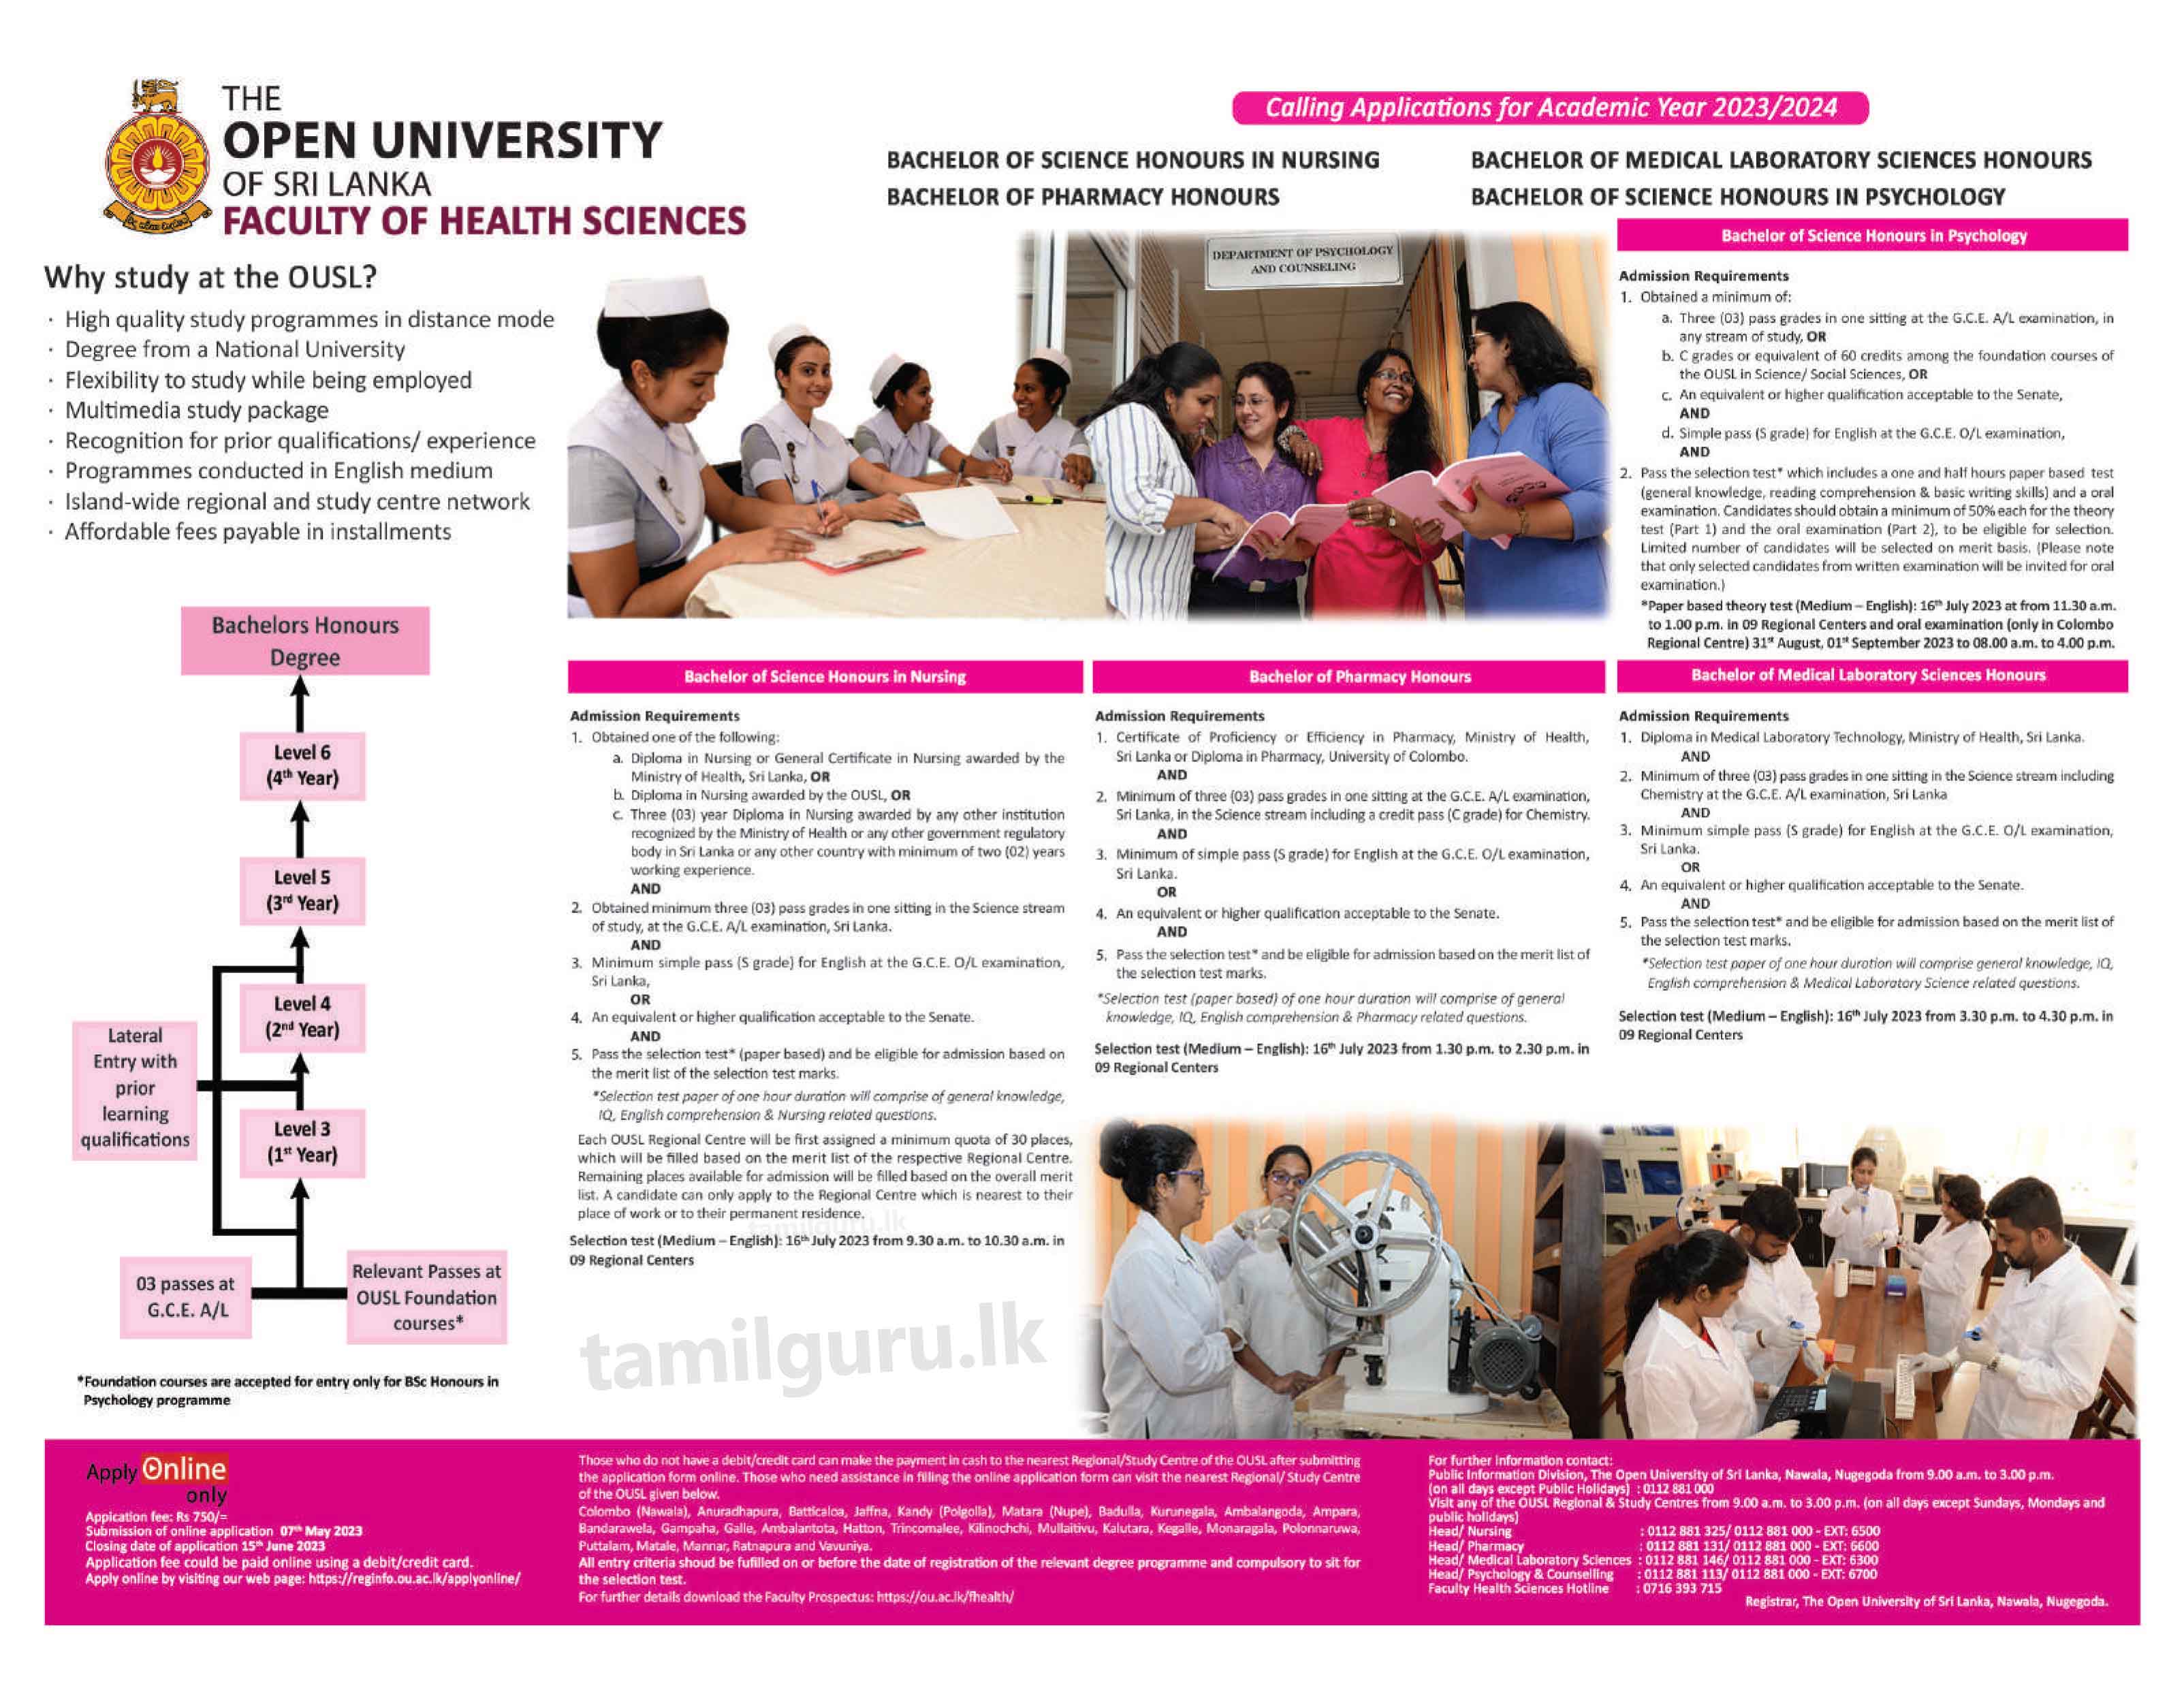 Degree Programmes 2023 Nursing Pharmacy MLS Psychology 2023 Open University Ad 